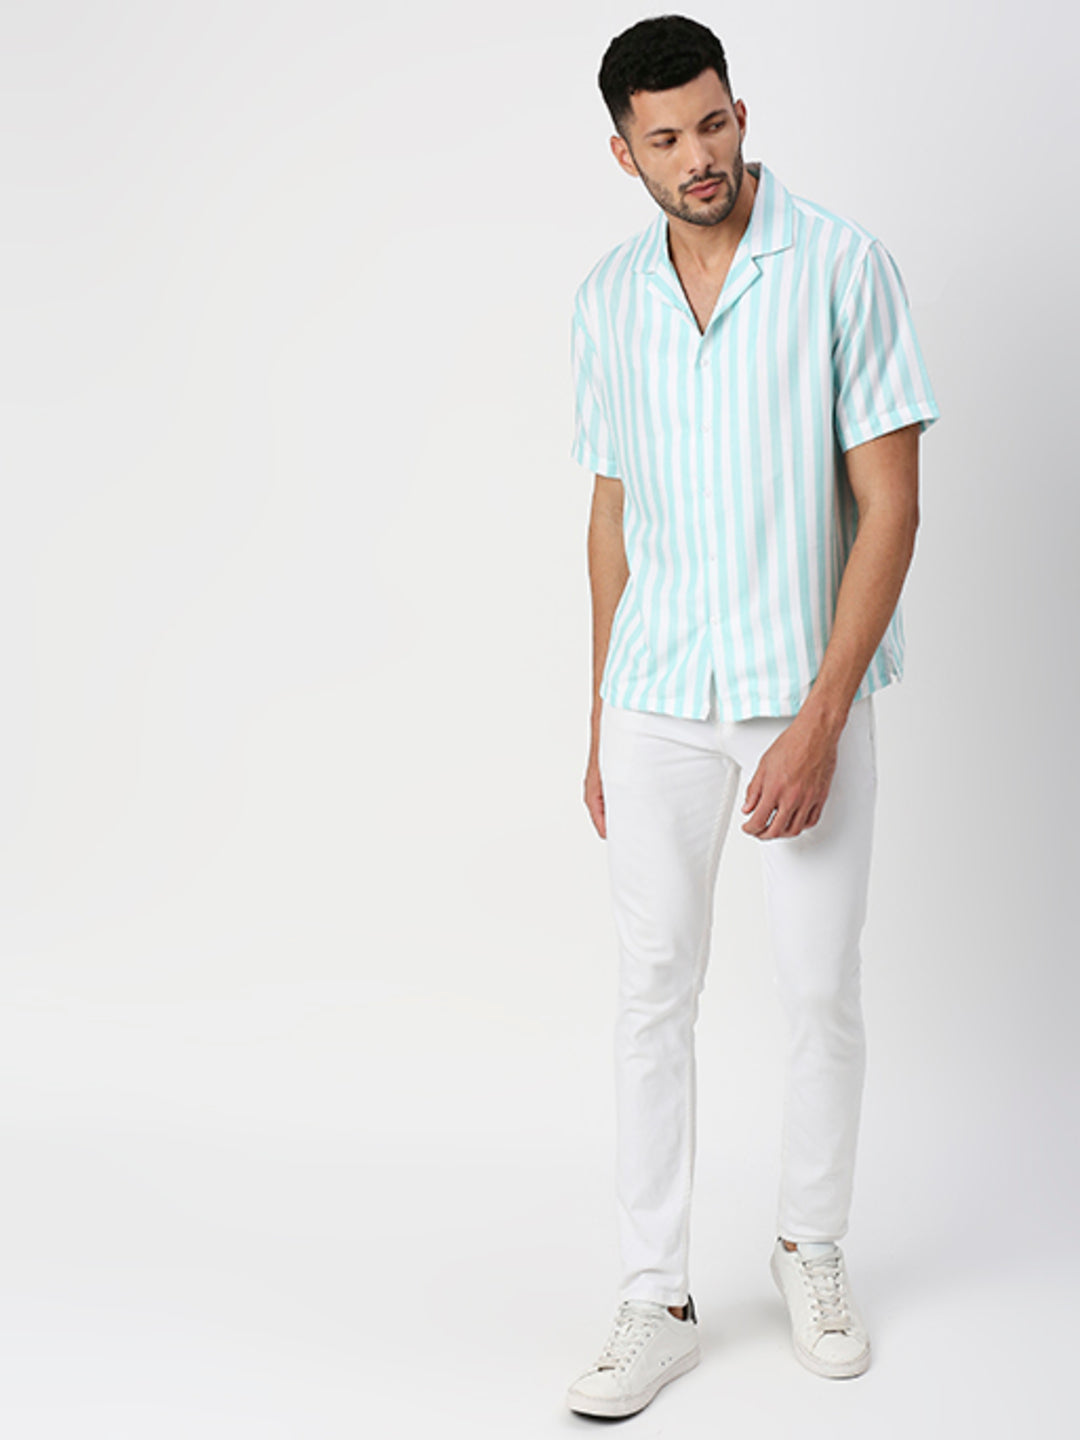 Hemsters White And Light Green Striped Half Sleeves Shirt For Men